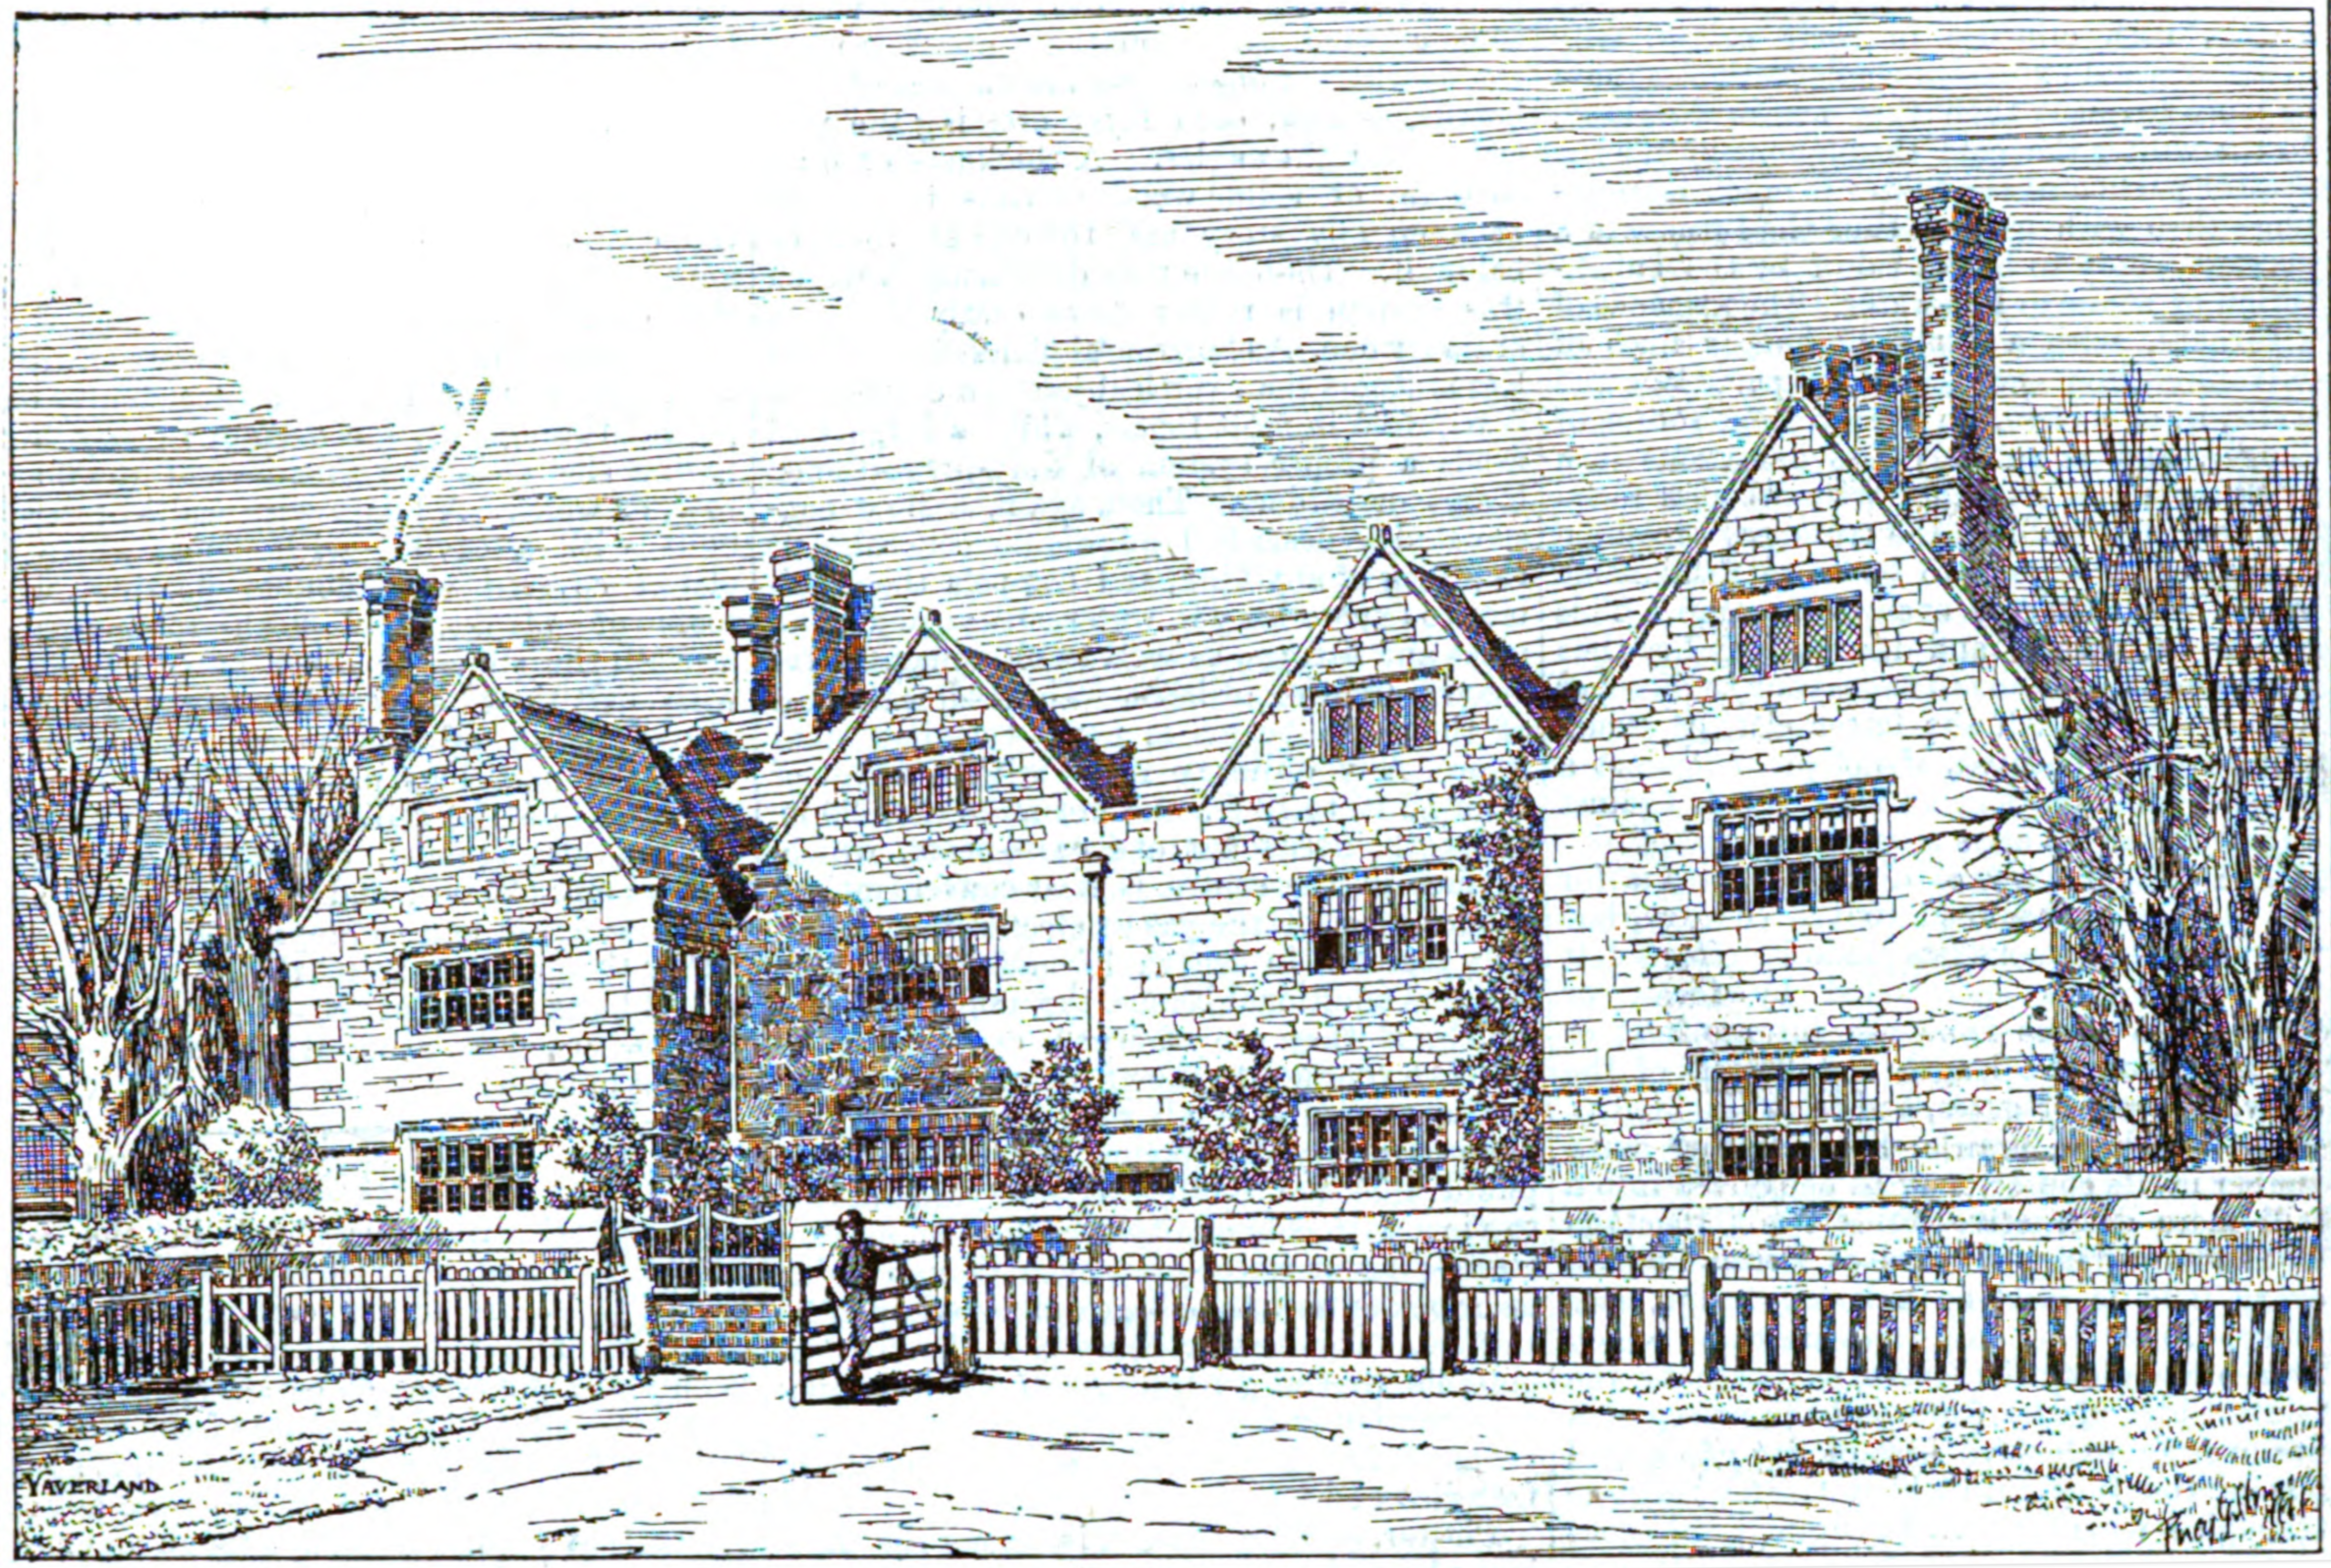 Yaverland Manor Wikipedia